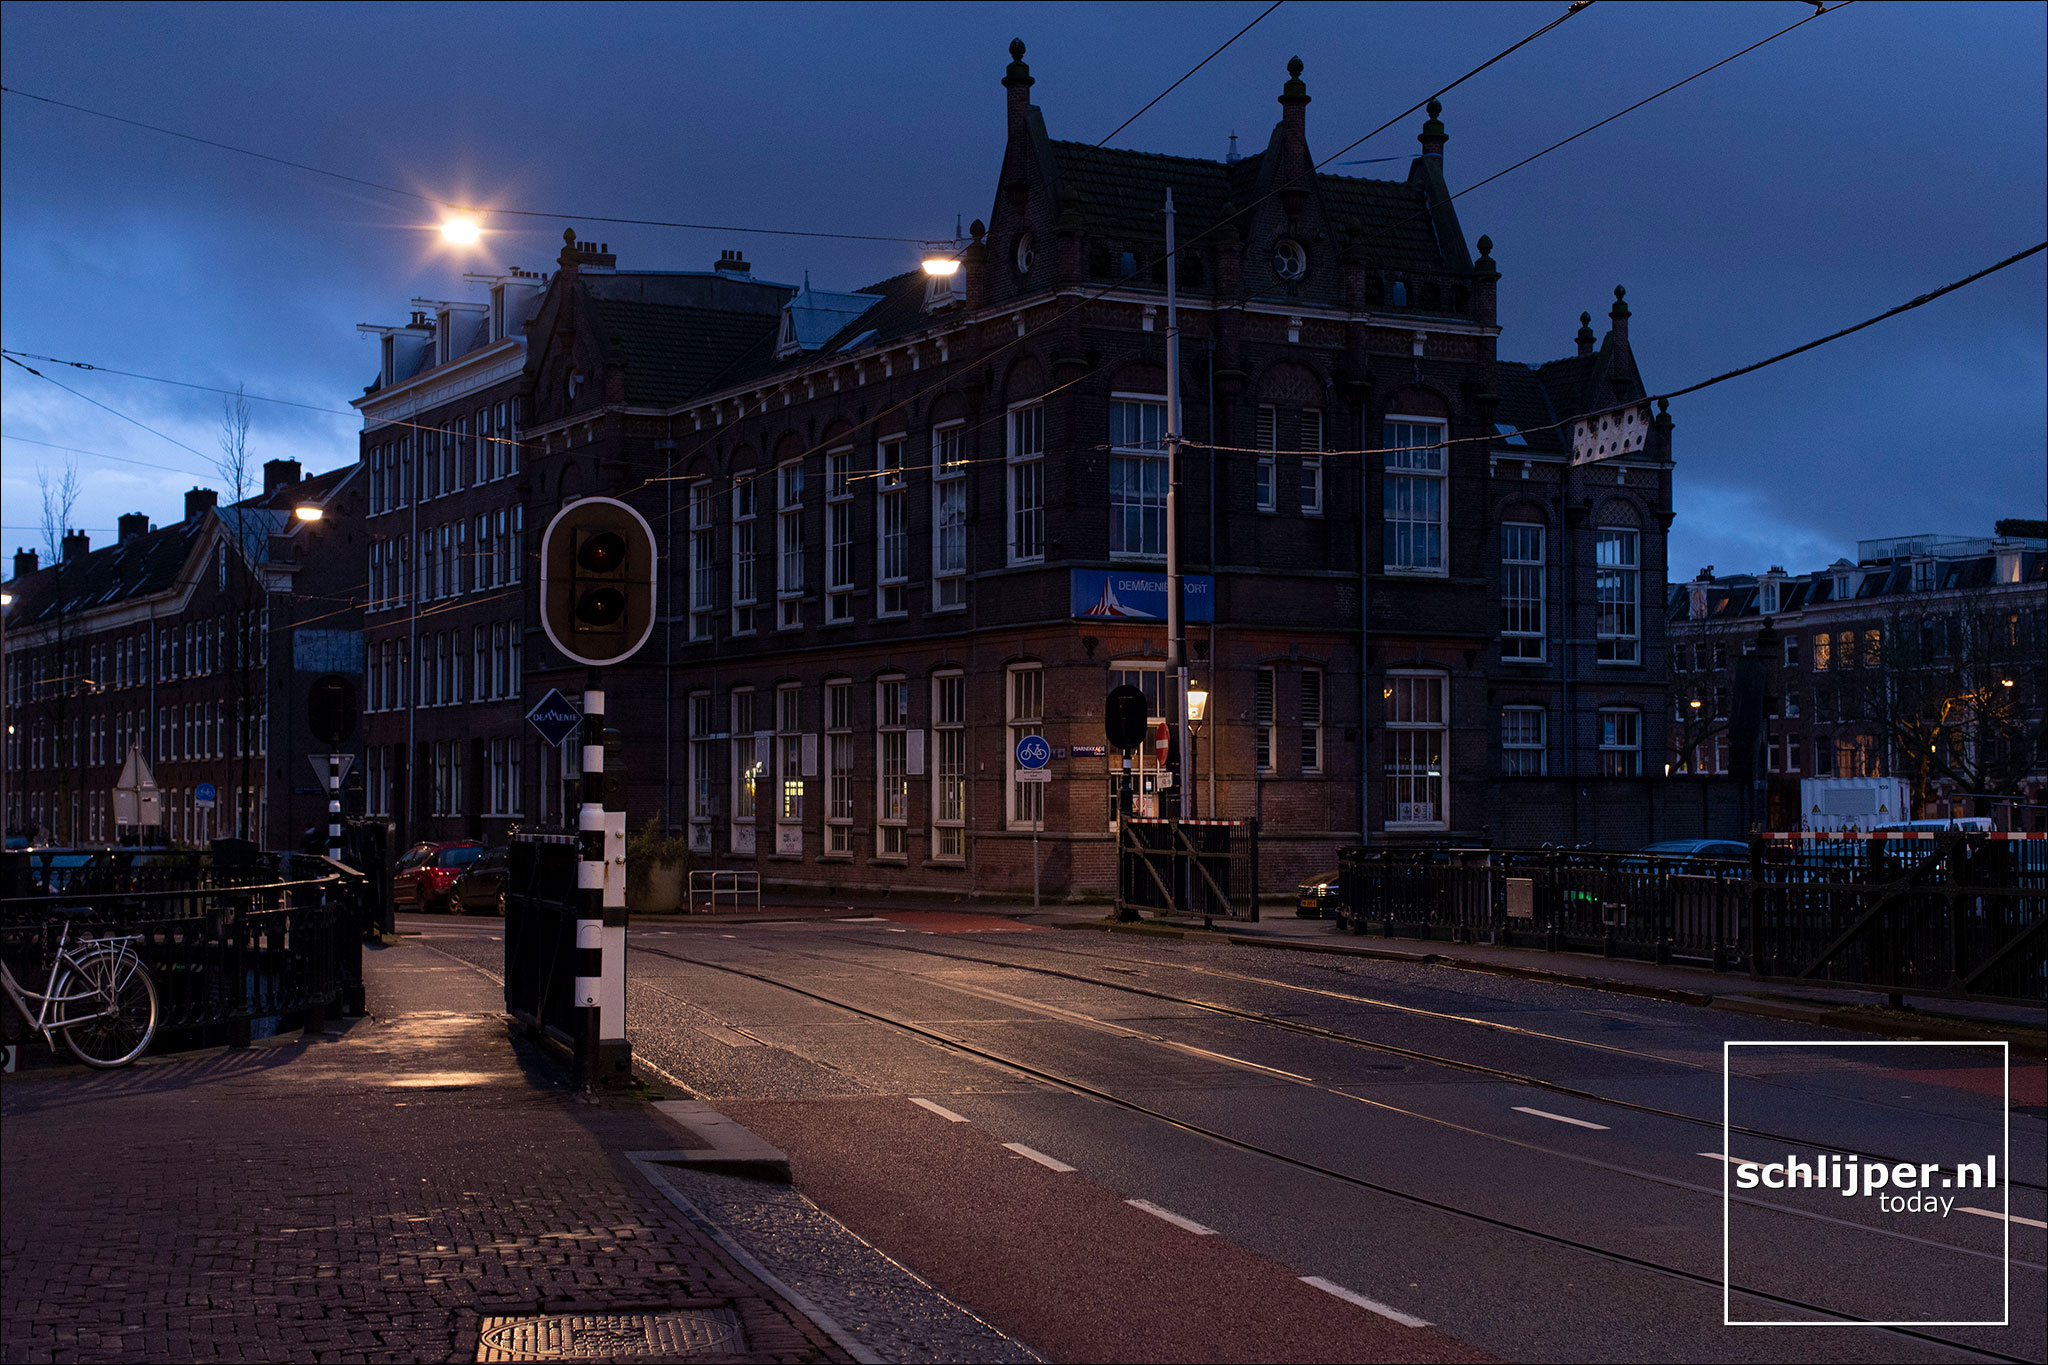 The Netherlands, Amsterdam, 3 februari 2020